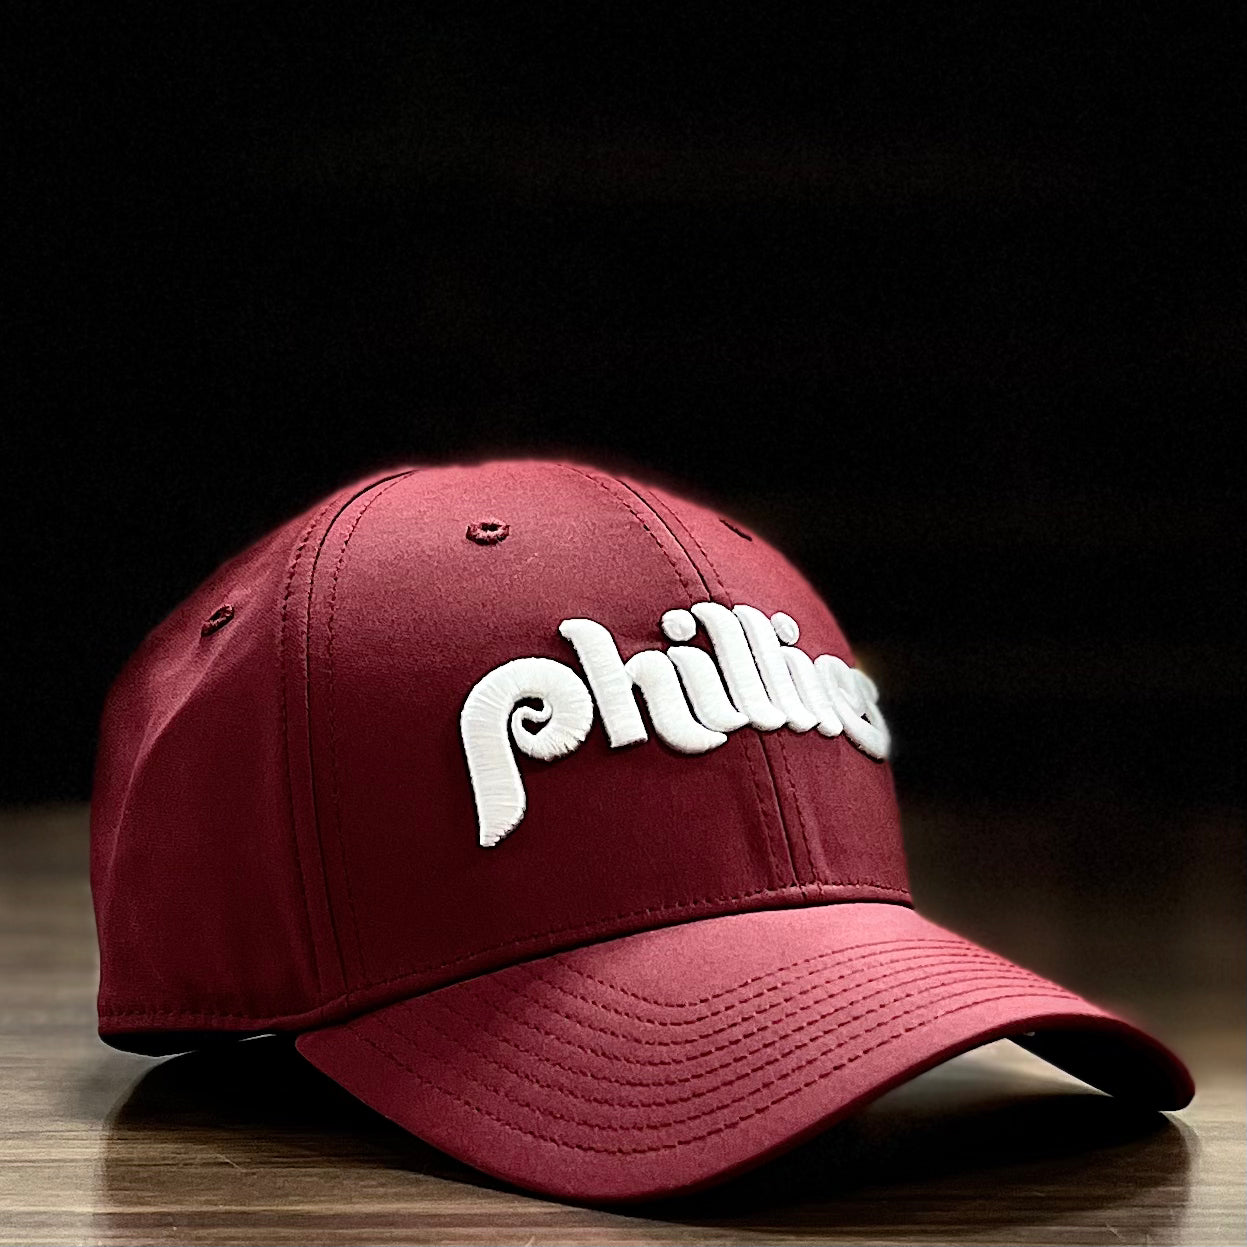 Philadelphia Phillies Cooperstown Core Flex Hat - Burgundy - Dynasty Sports & Framing 